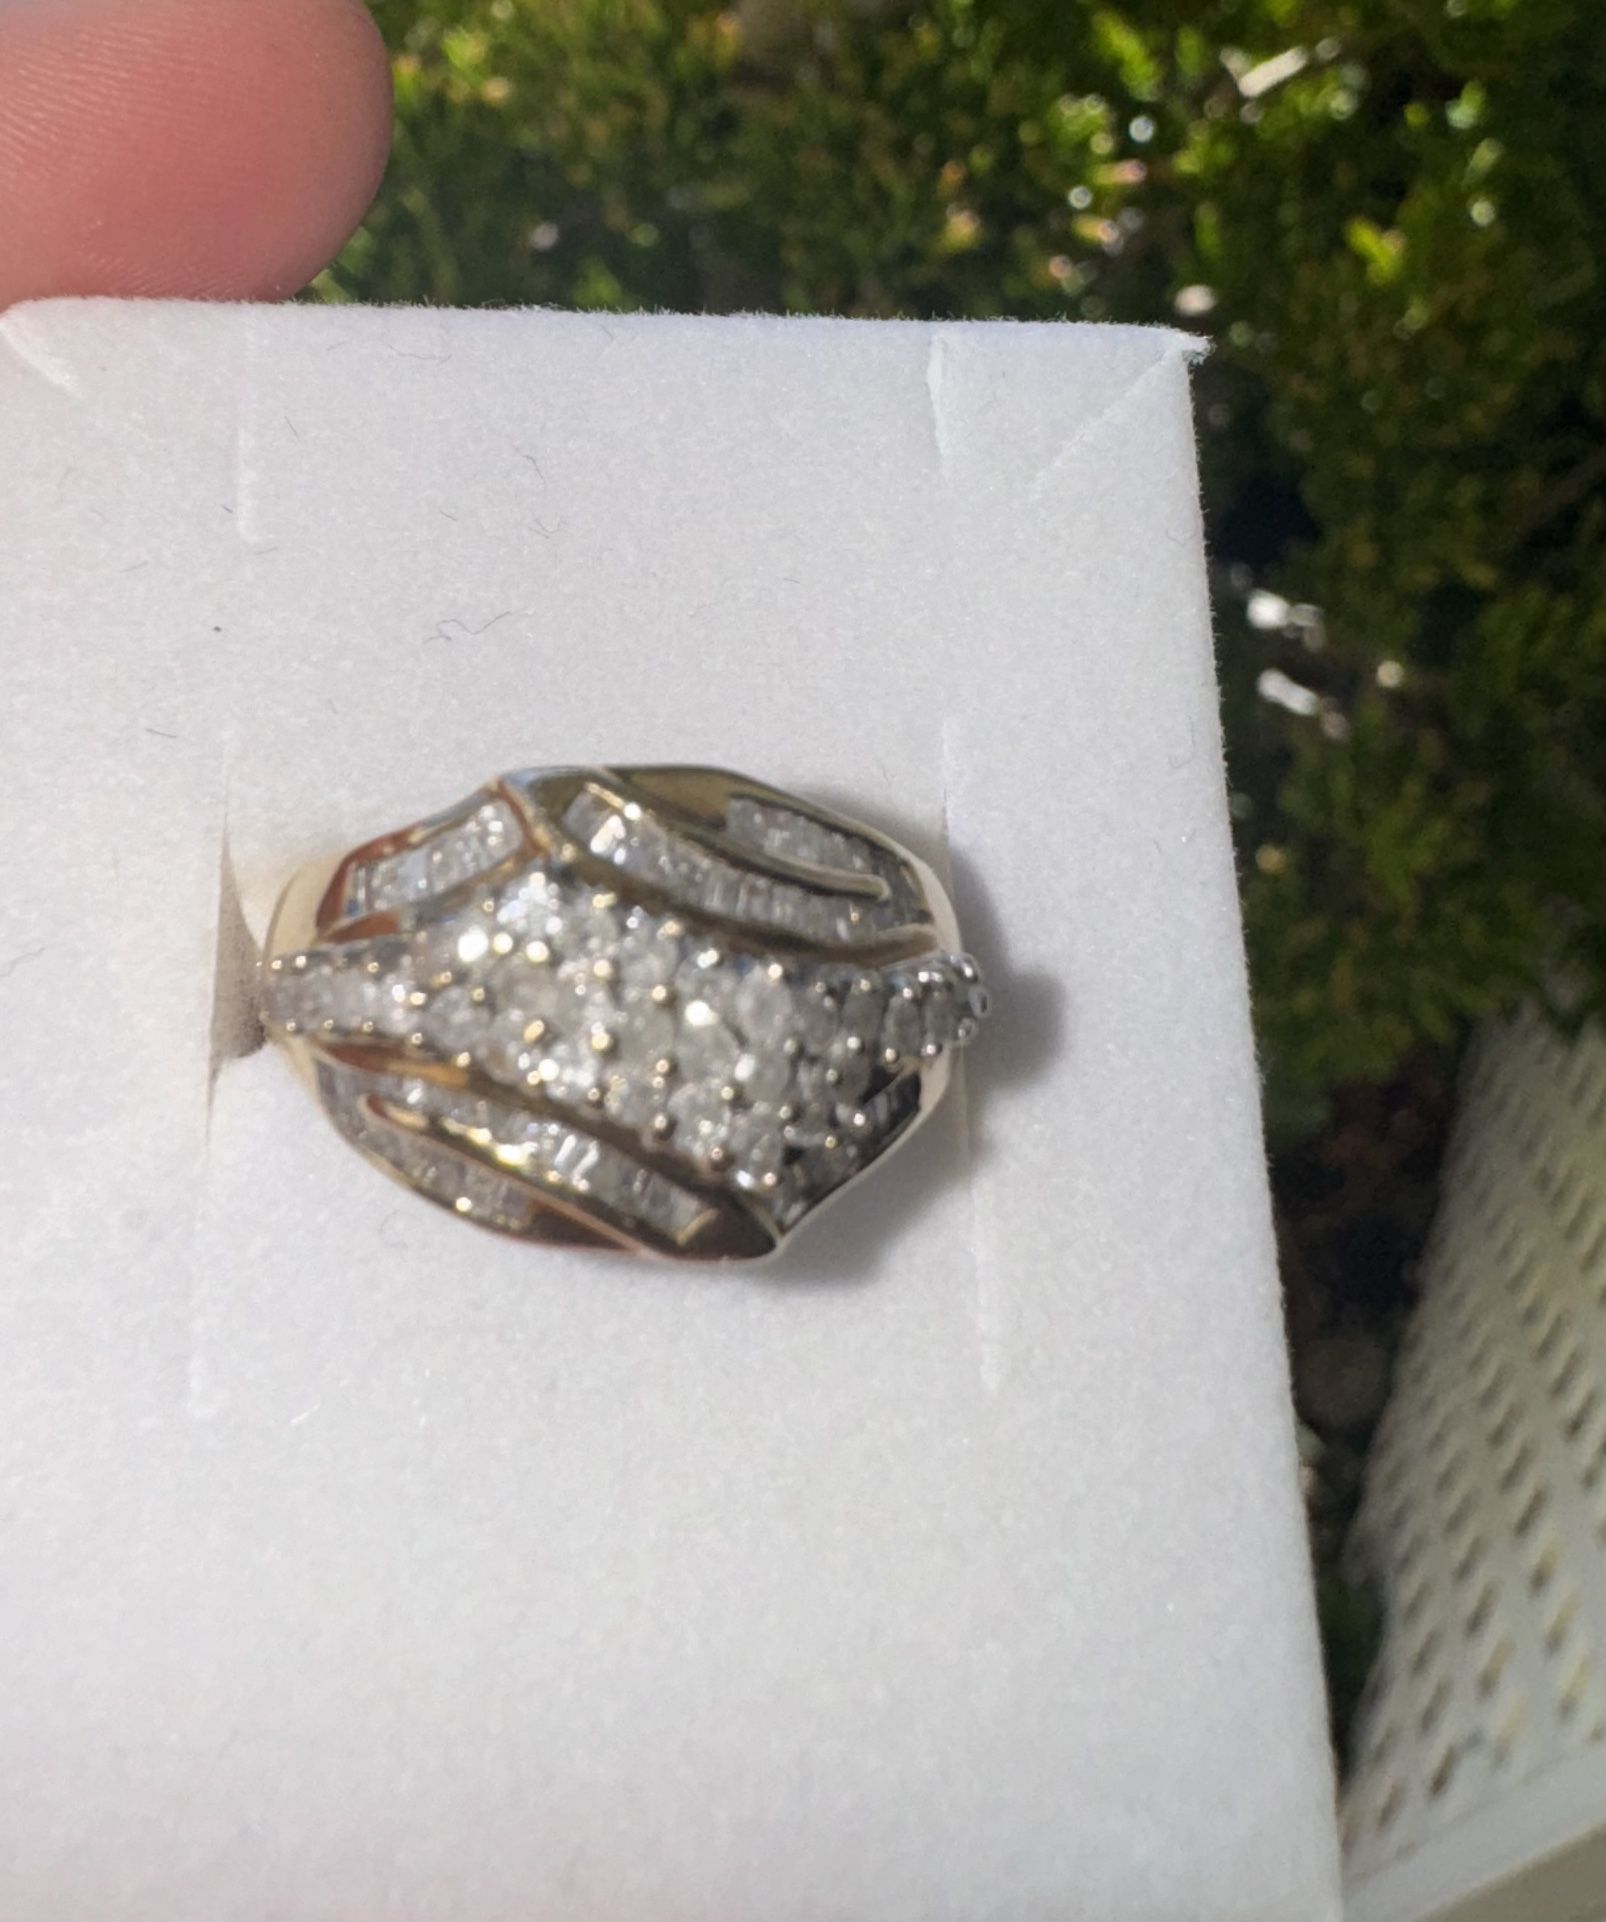 14k Gold Ring Size 7